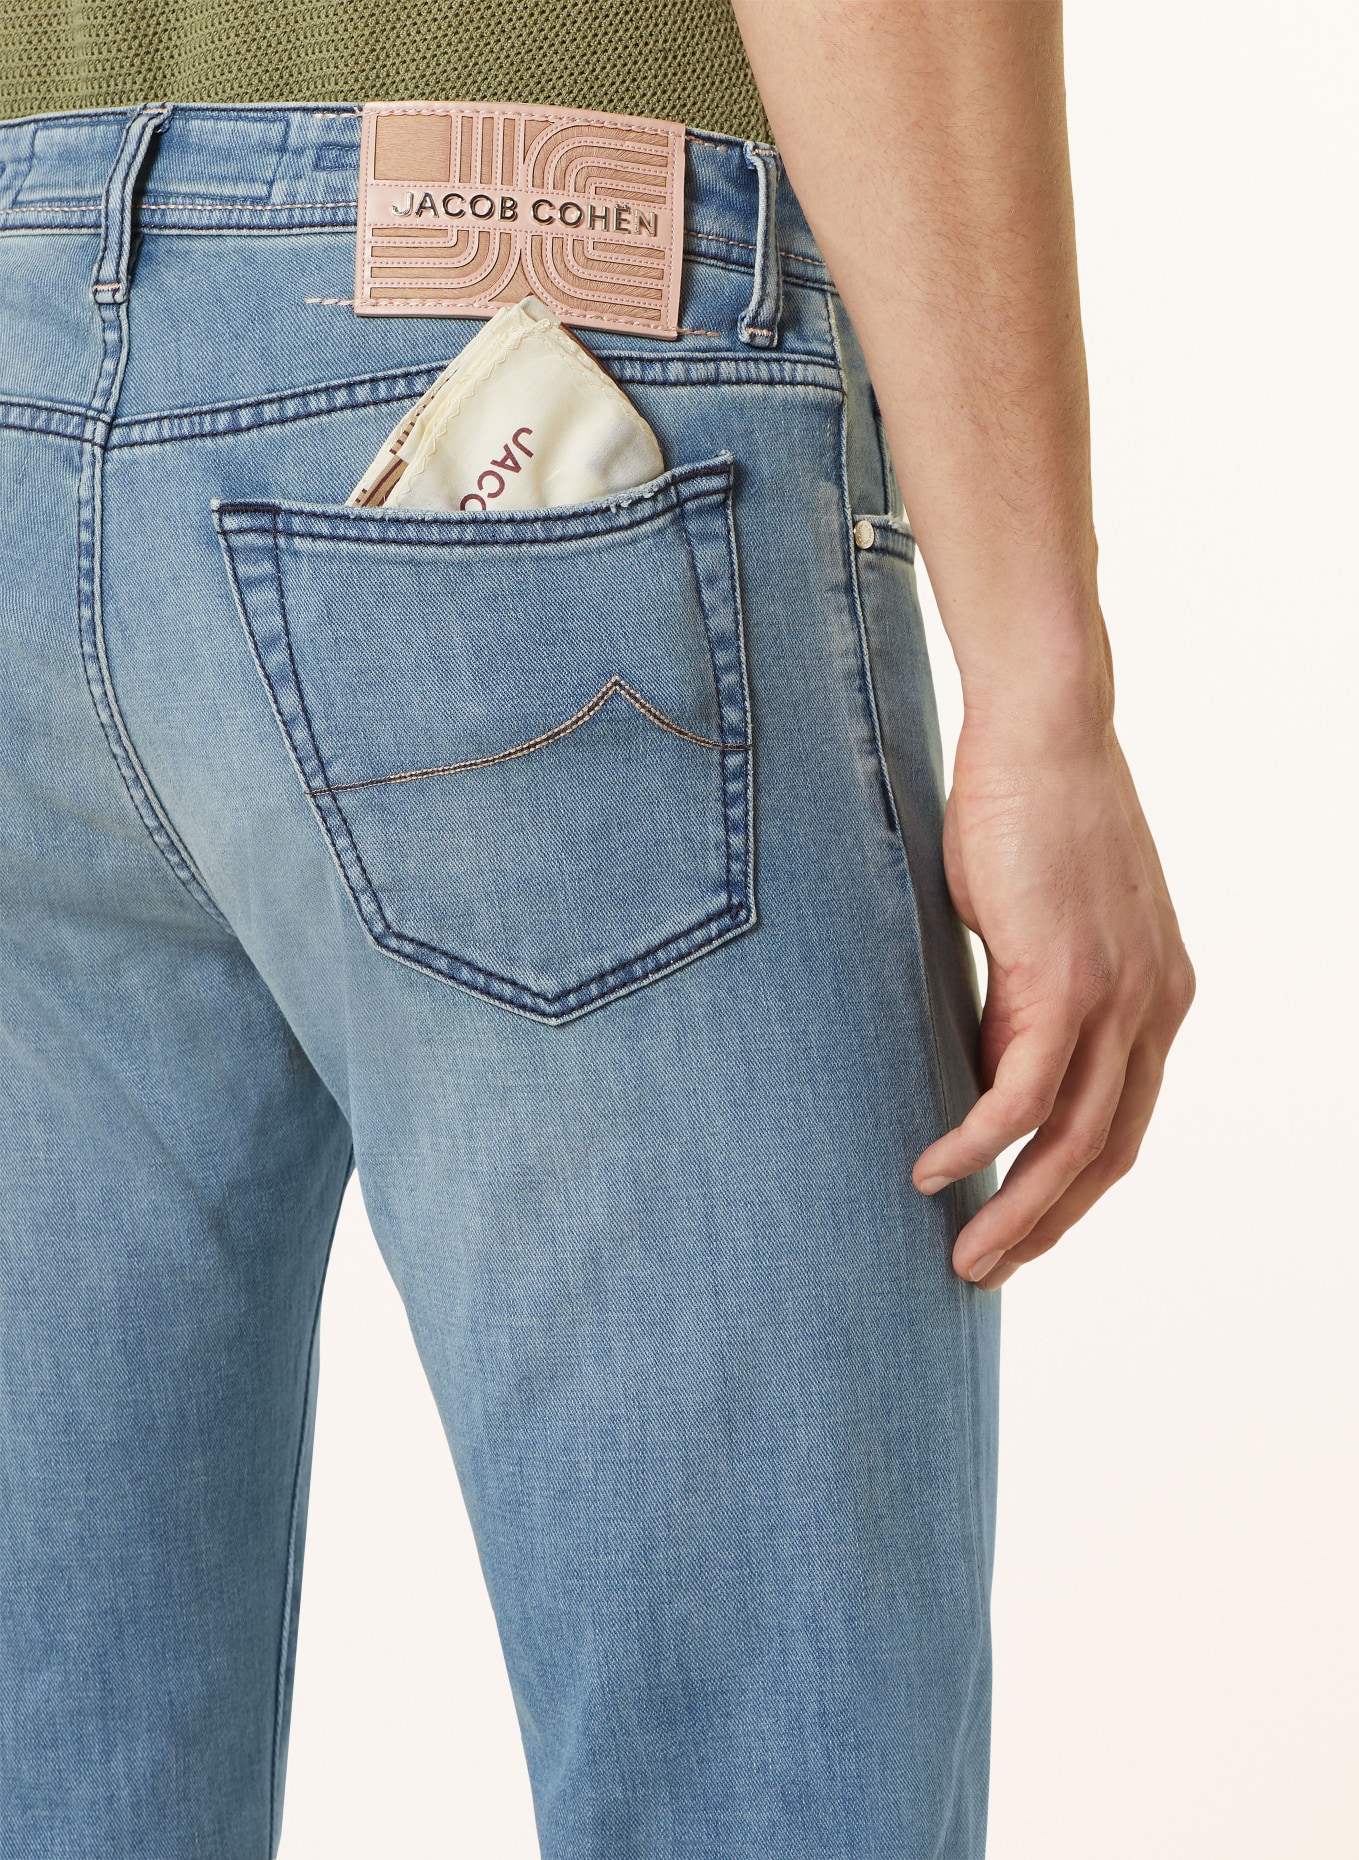 JACOB COHEN Jeans BARD Slim Fit, Farbe: 701D Light Blue (Bild 6)